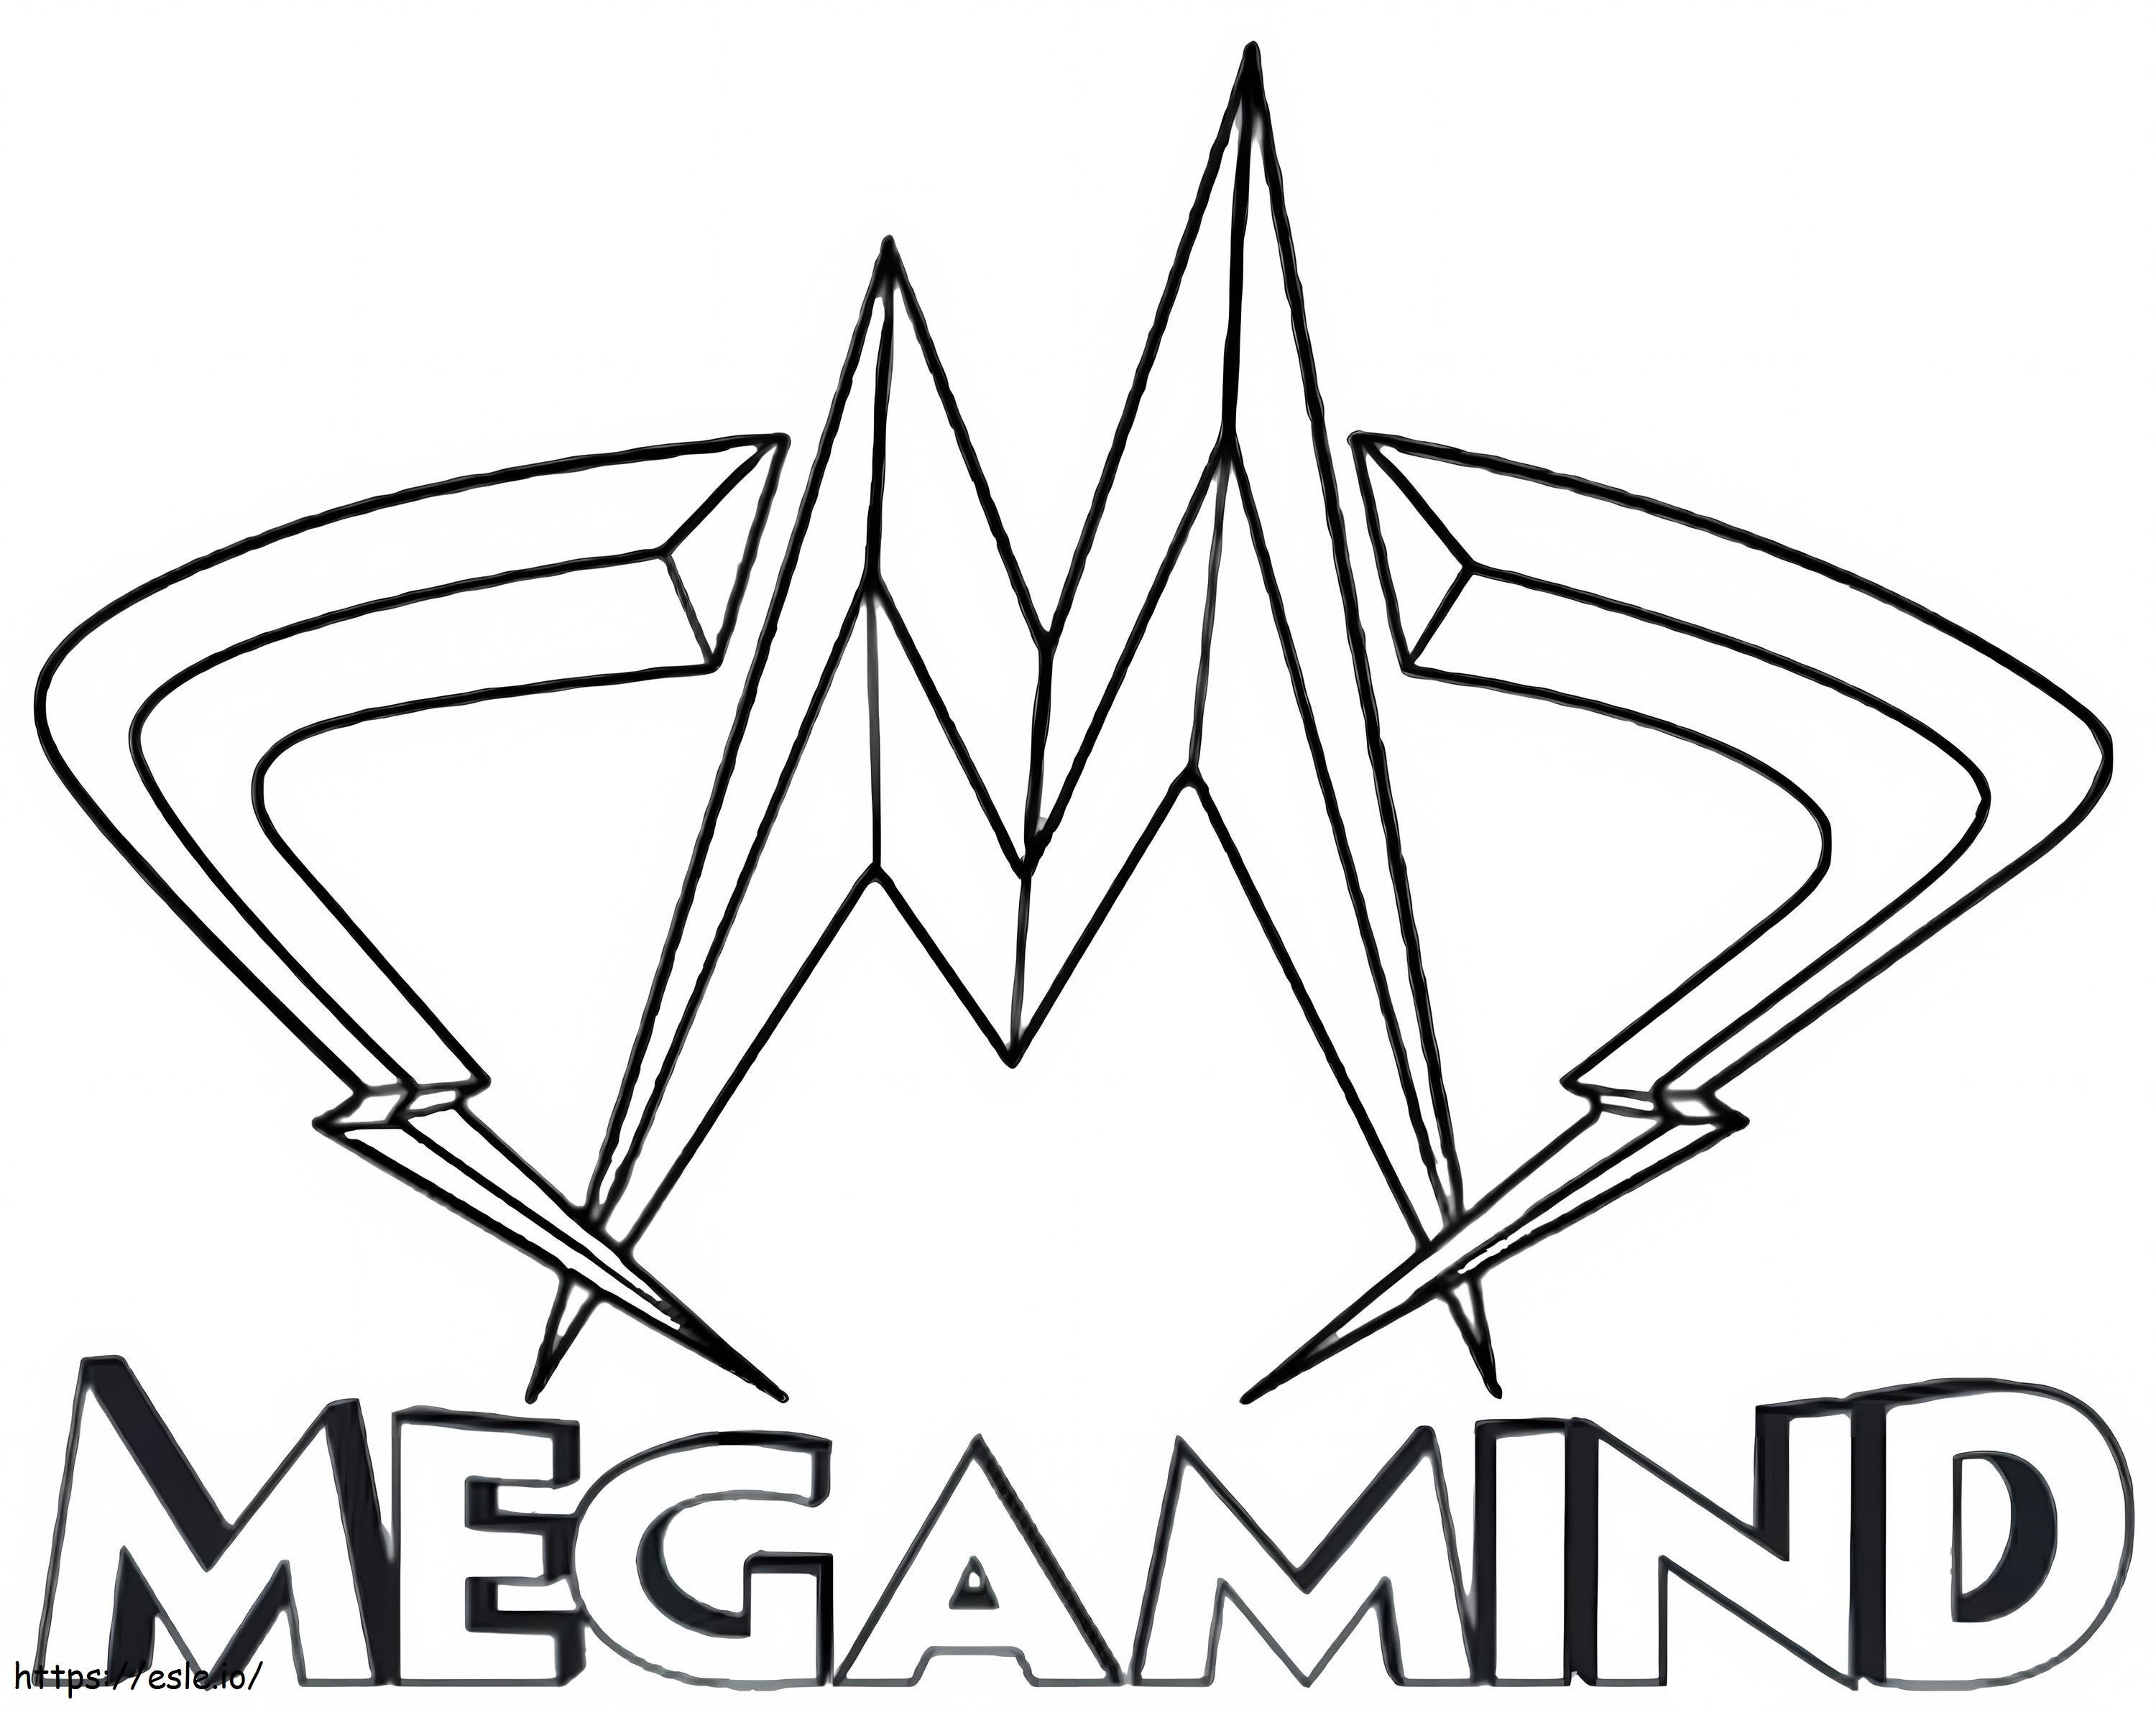 Megamind-Logo ausmalbilder